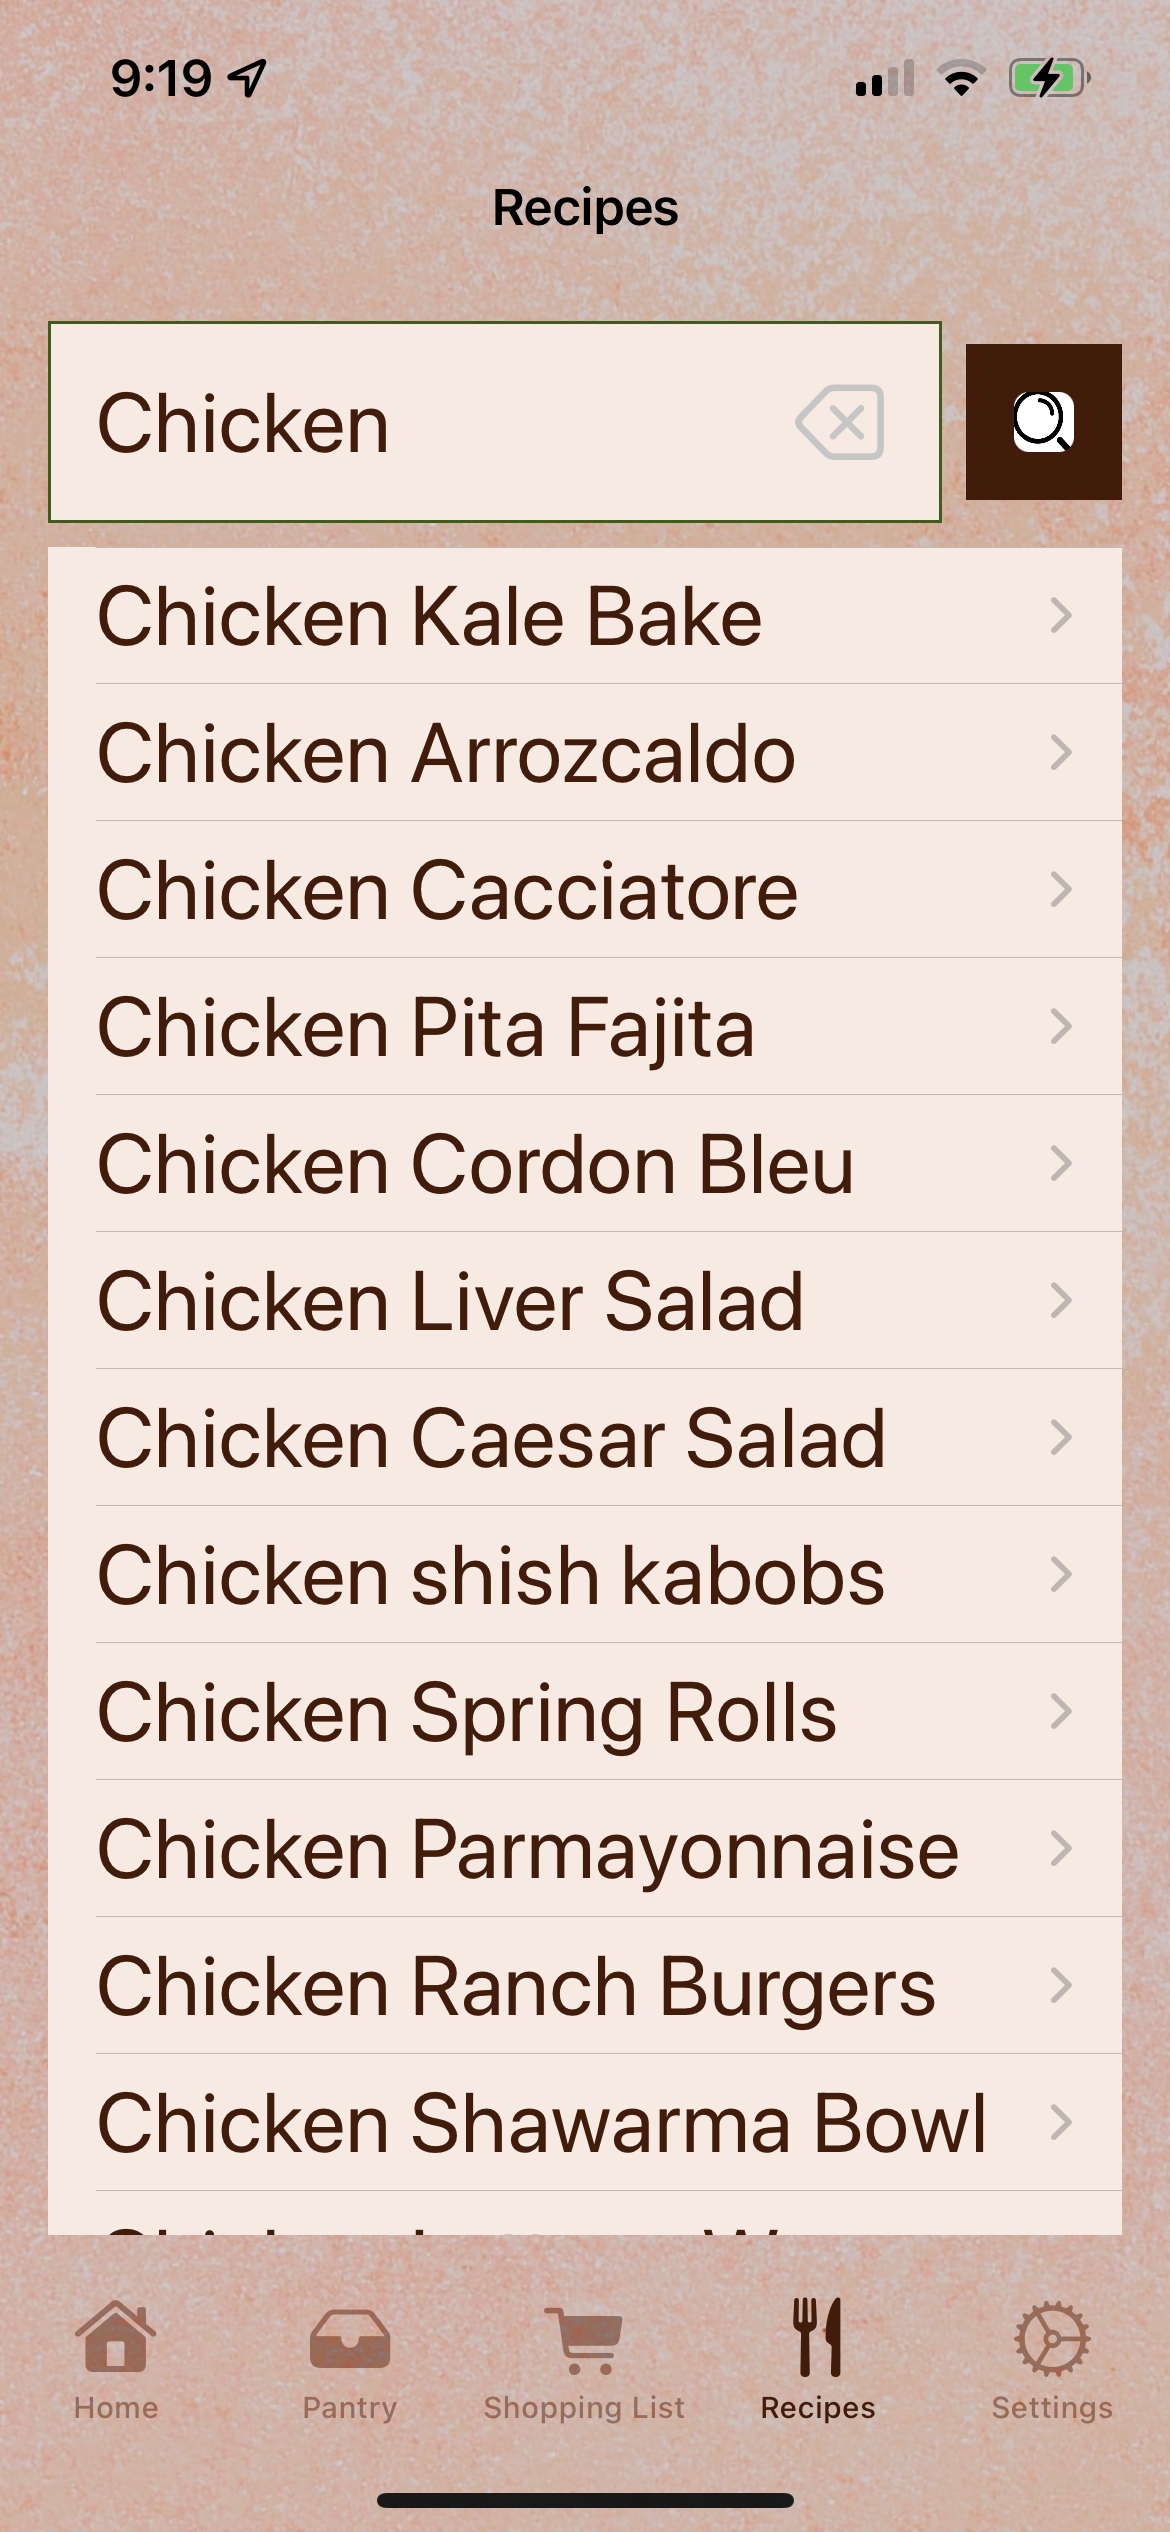 Recipes search screenshot